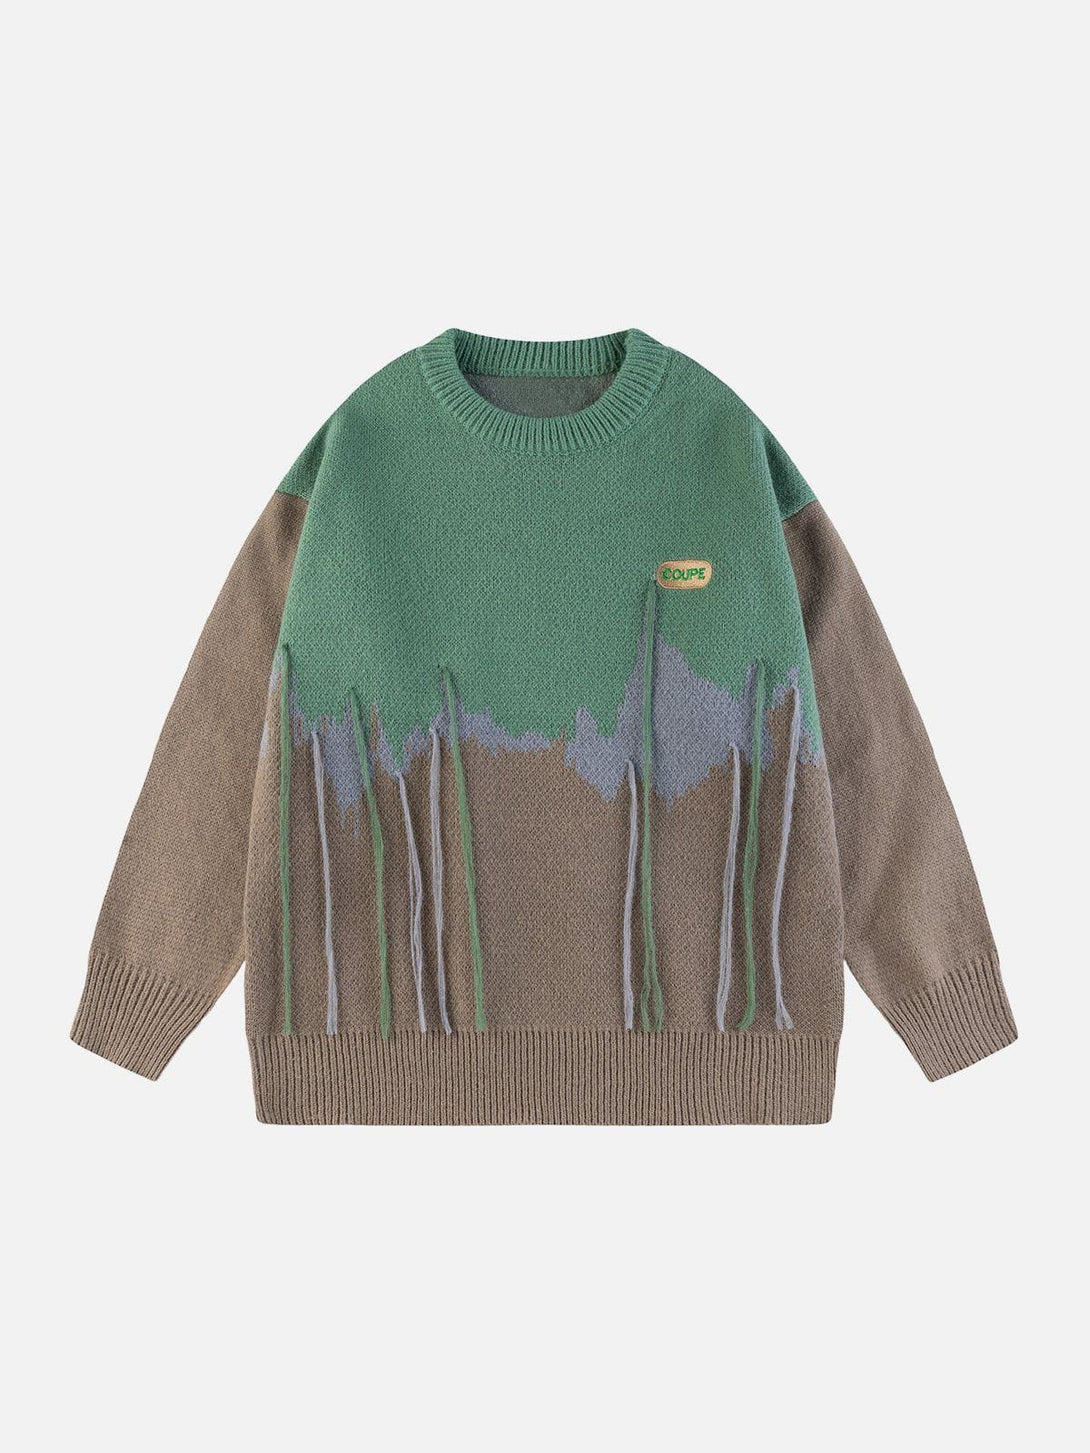 Majesda® - Colorblock Mountain Graphic Tassel Sweater outfit ideas streetwear fashion